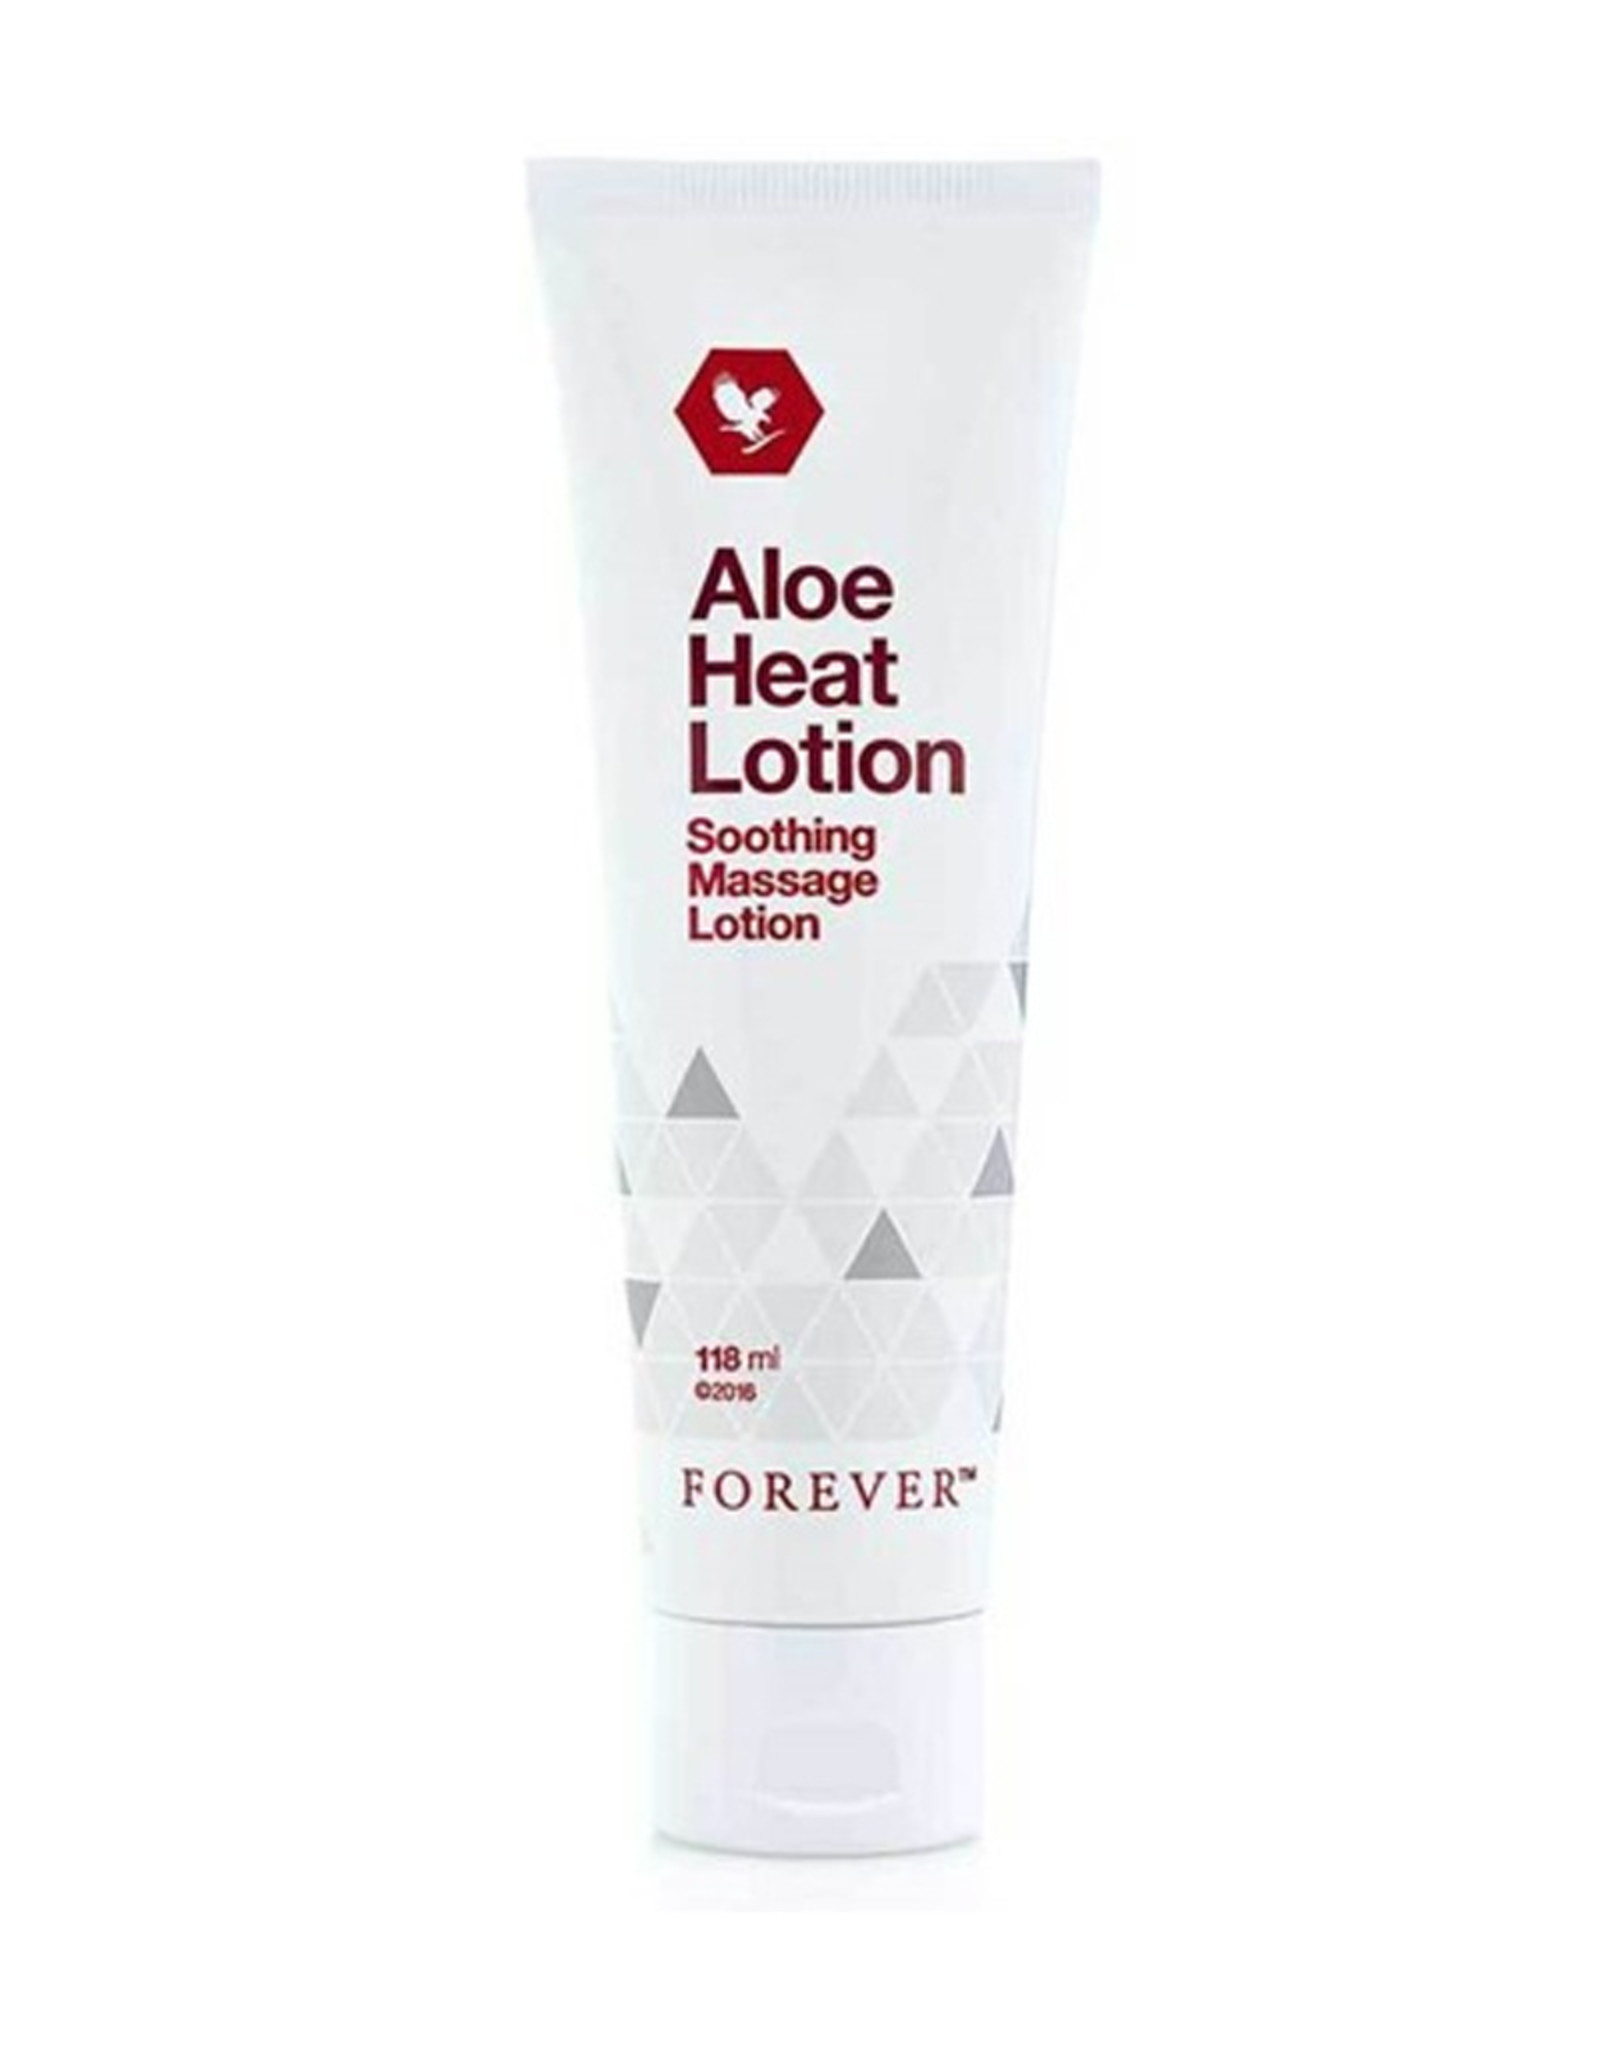 Forever Aloe Heat lotion